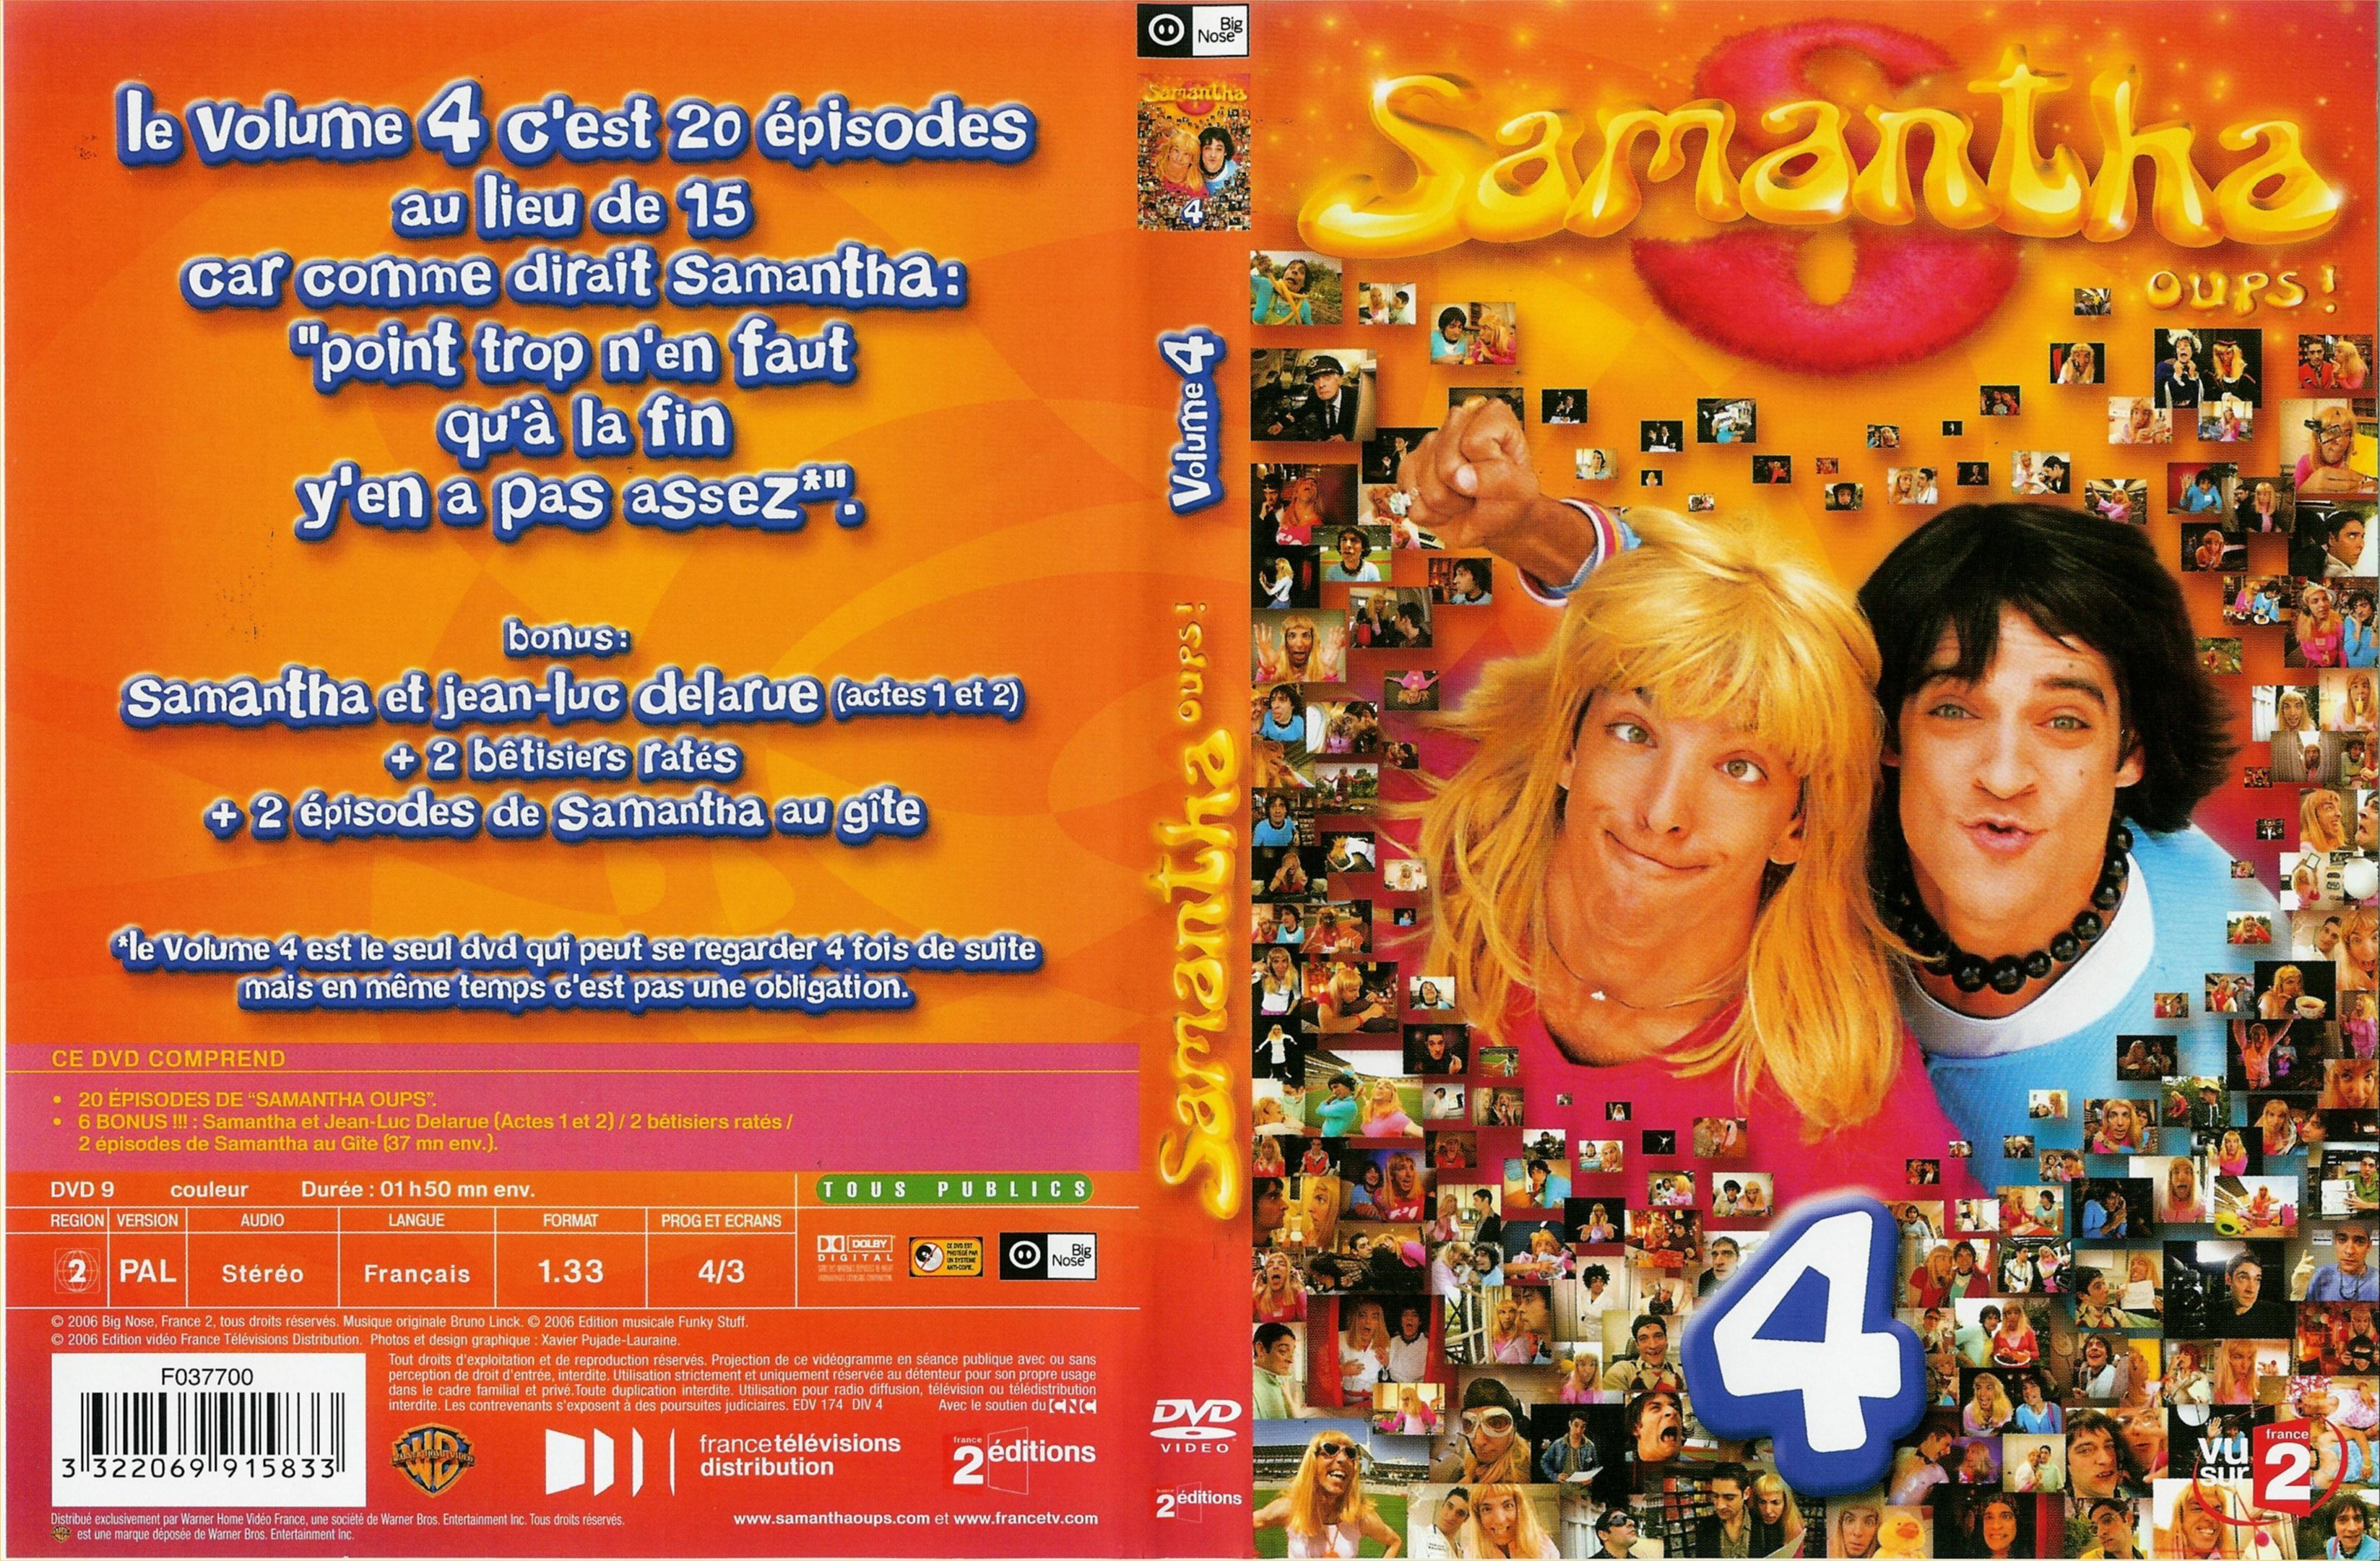 Jaquette DVD Samantha oups vol 4